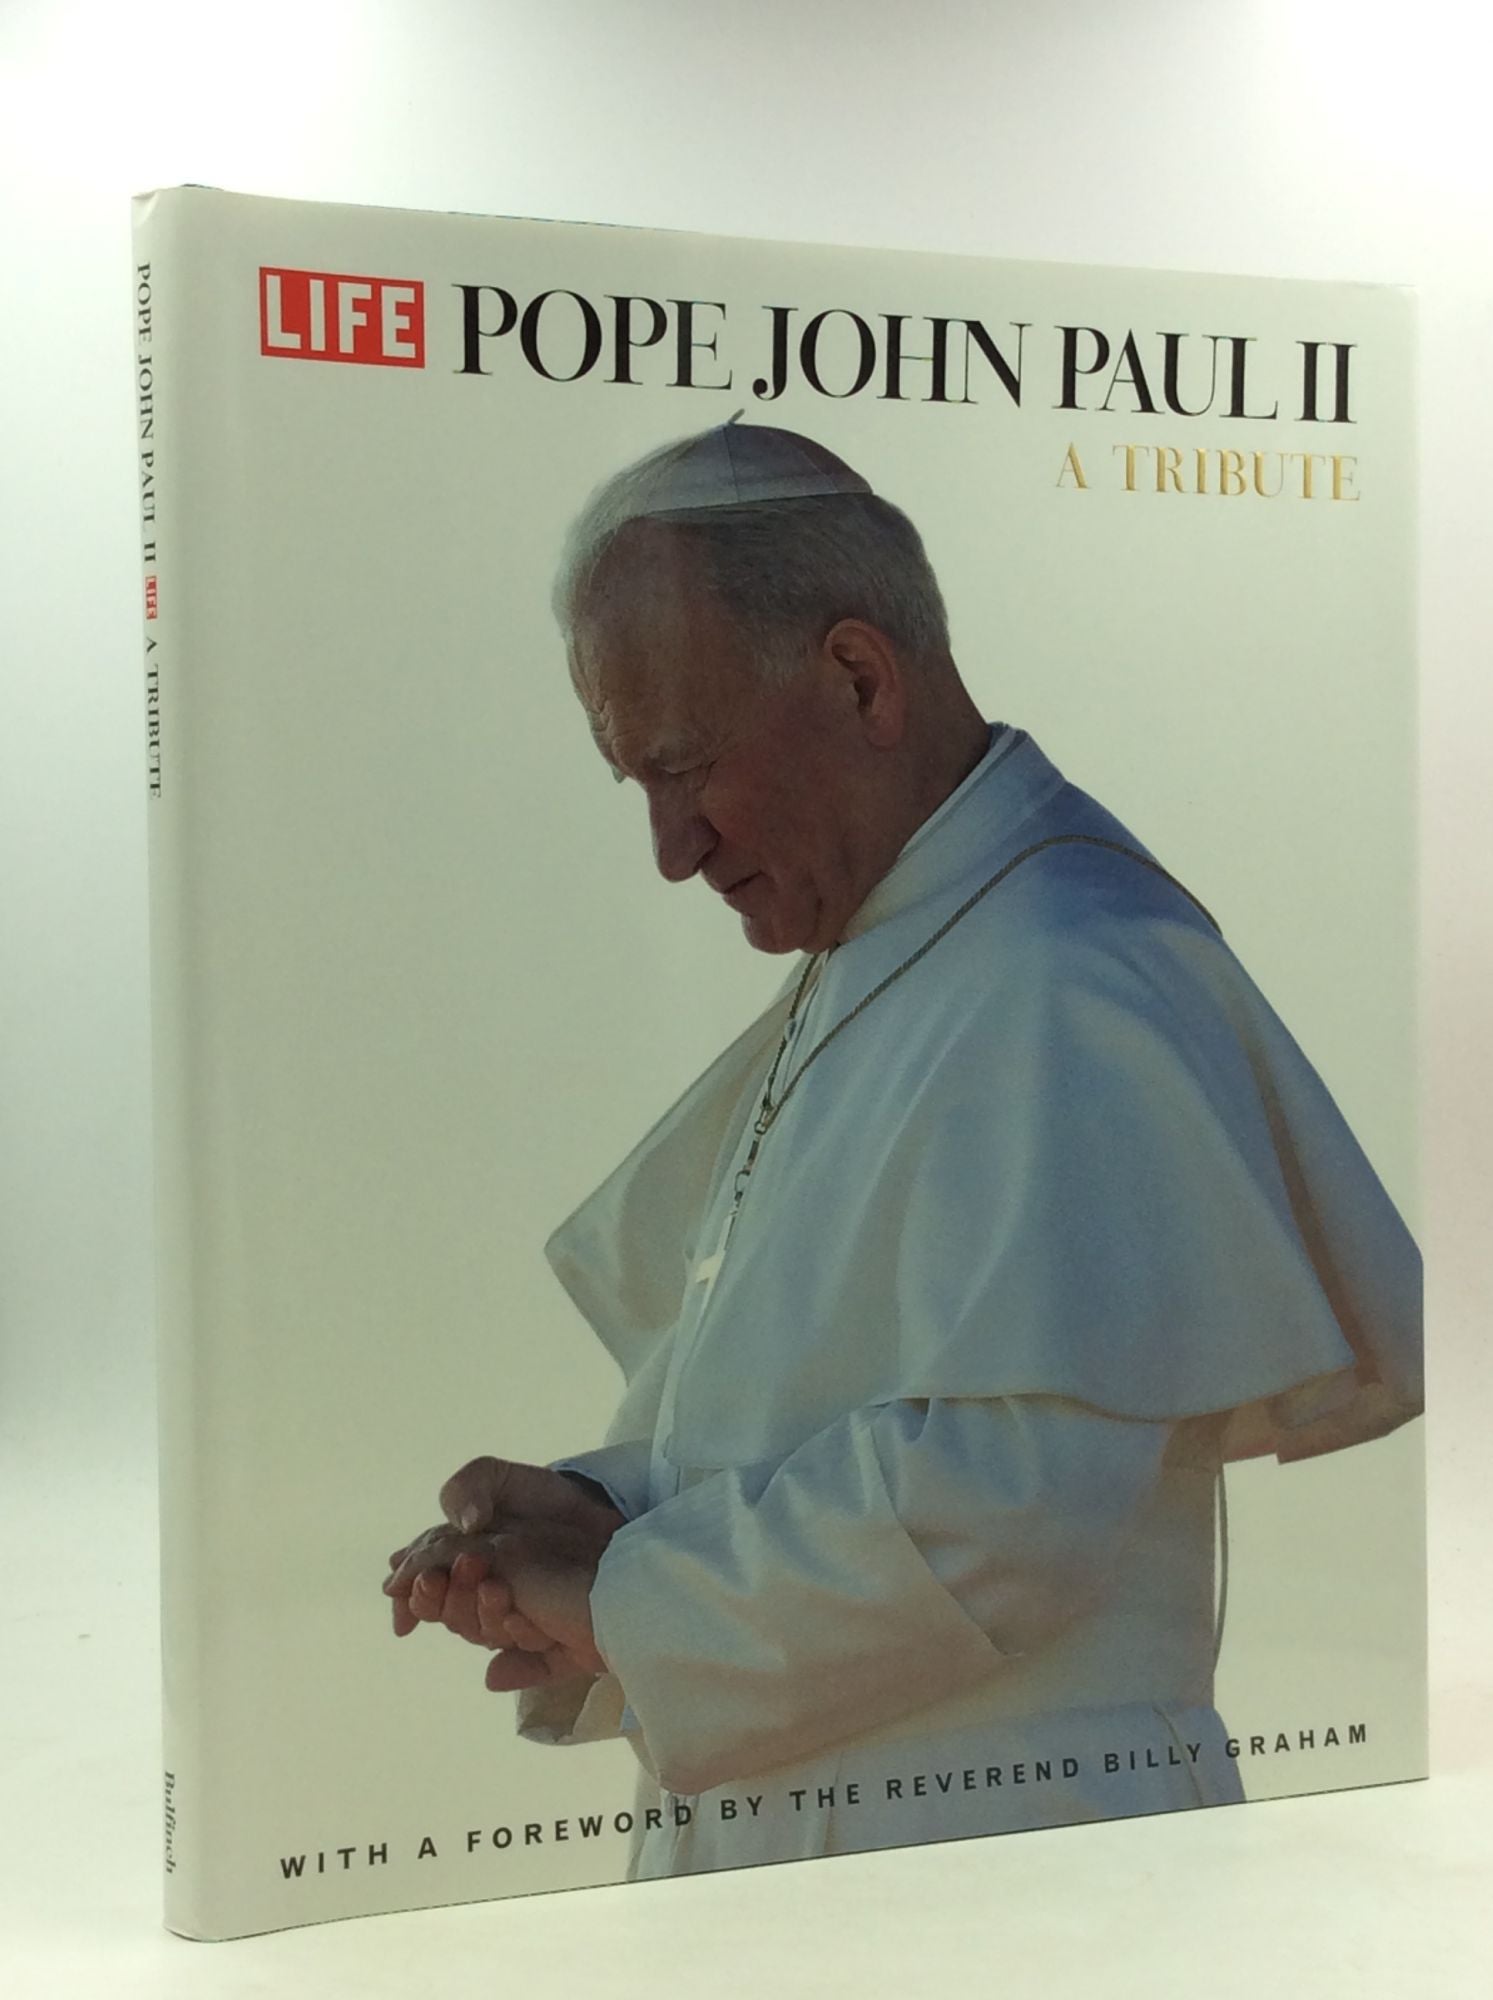 Robert Sullivan and the Editors of LIFE - Pope John Paul II: A Tribute